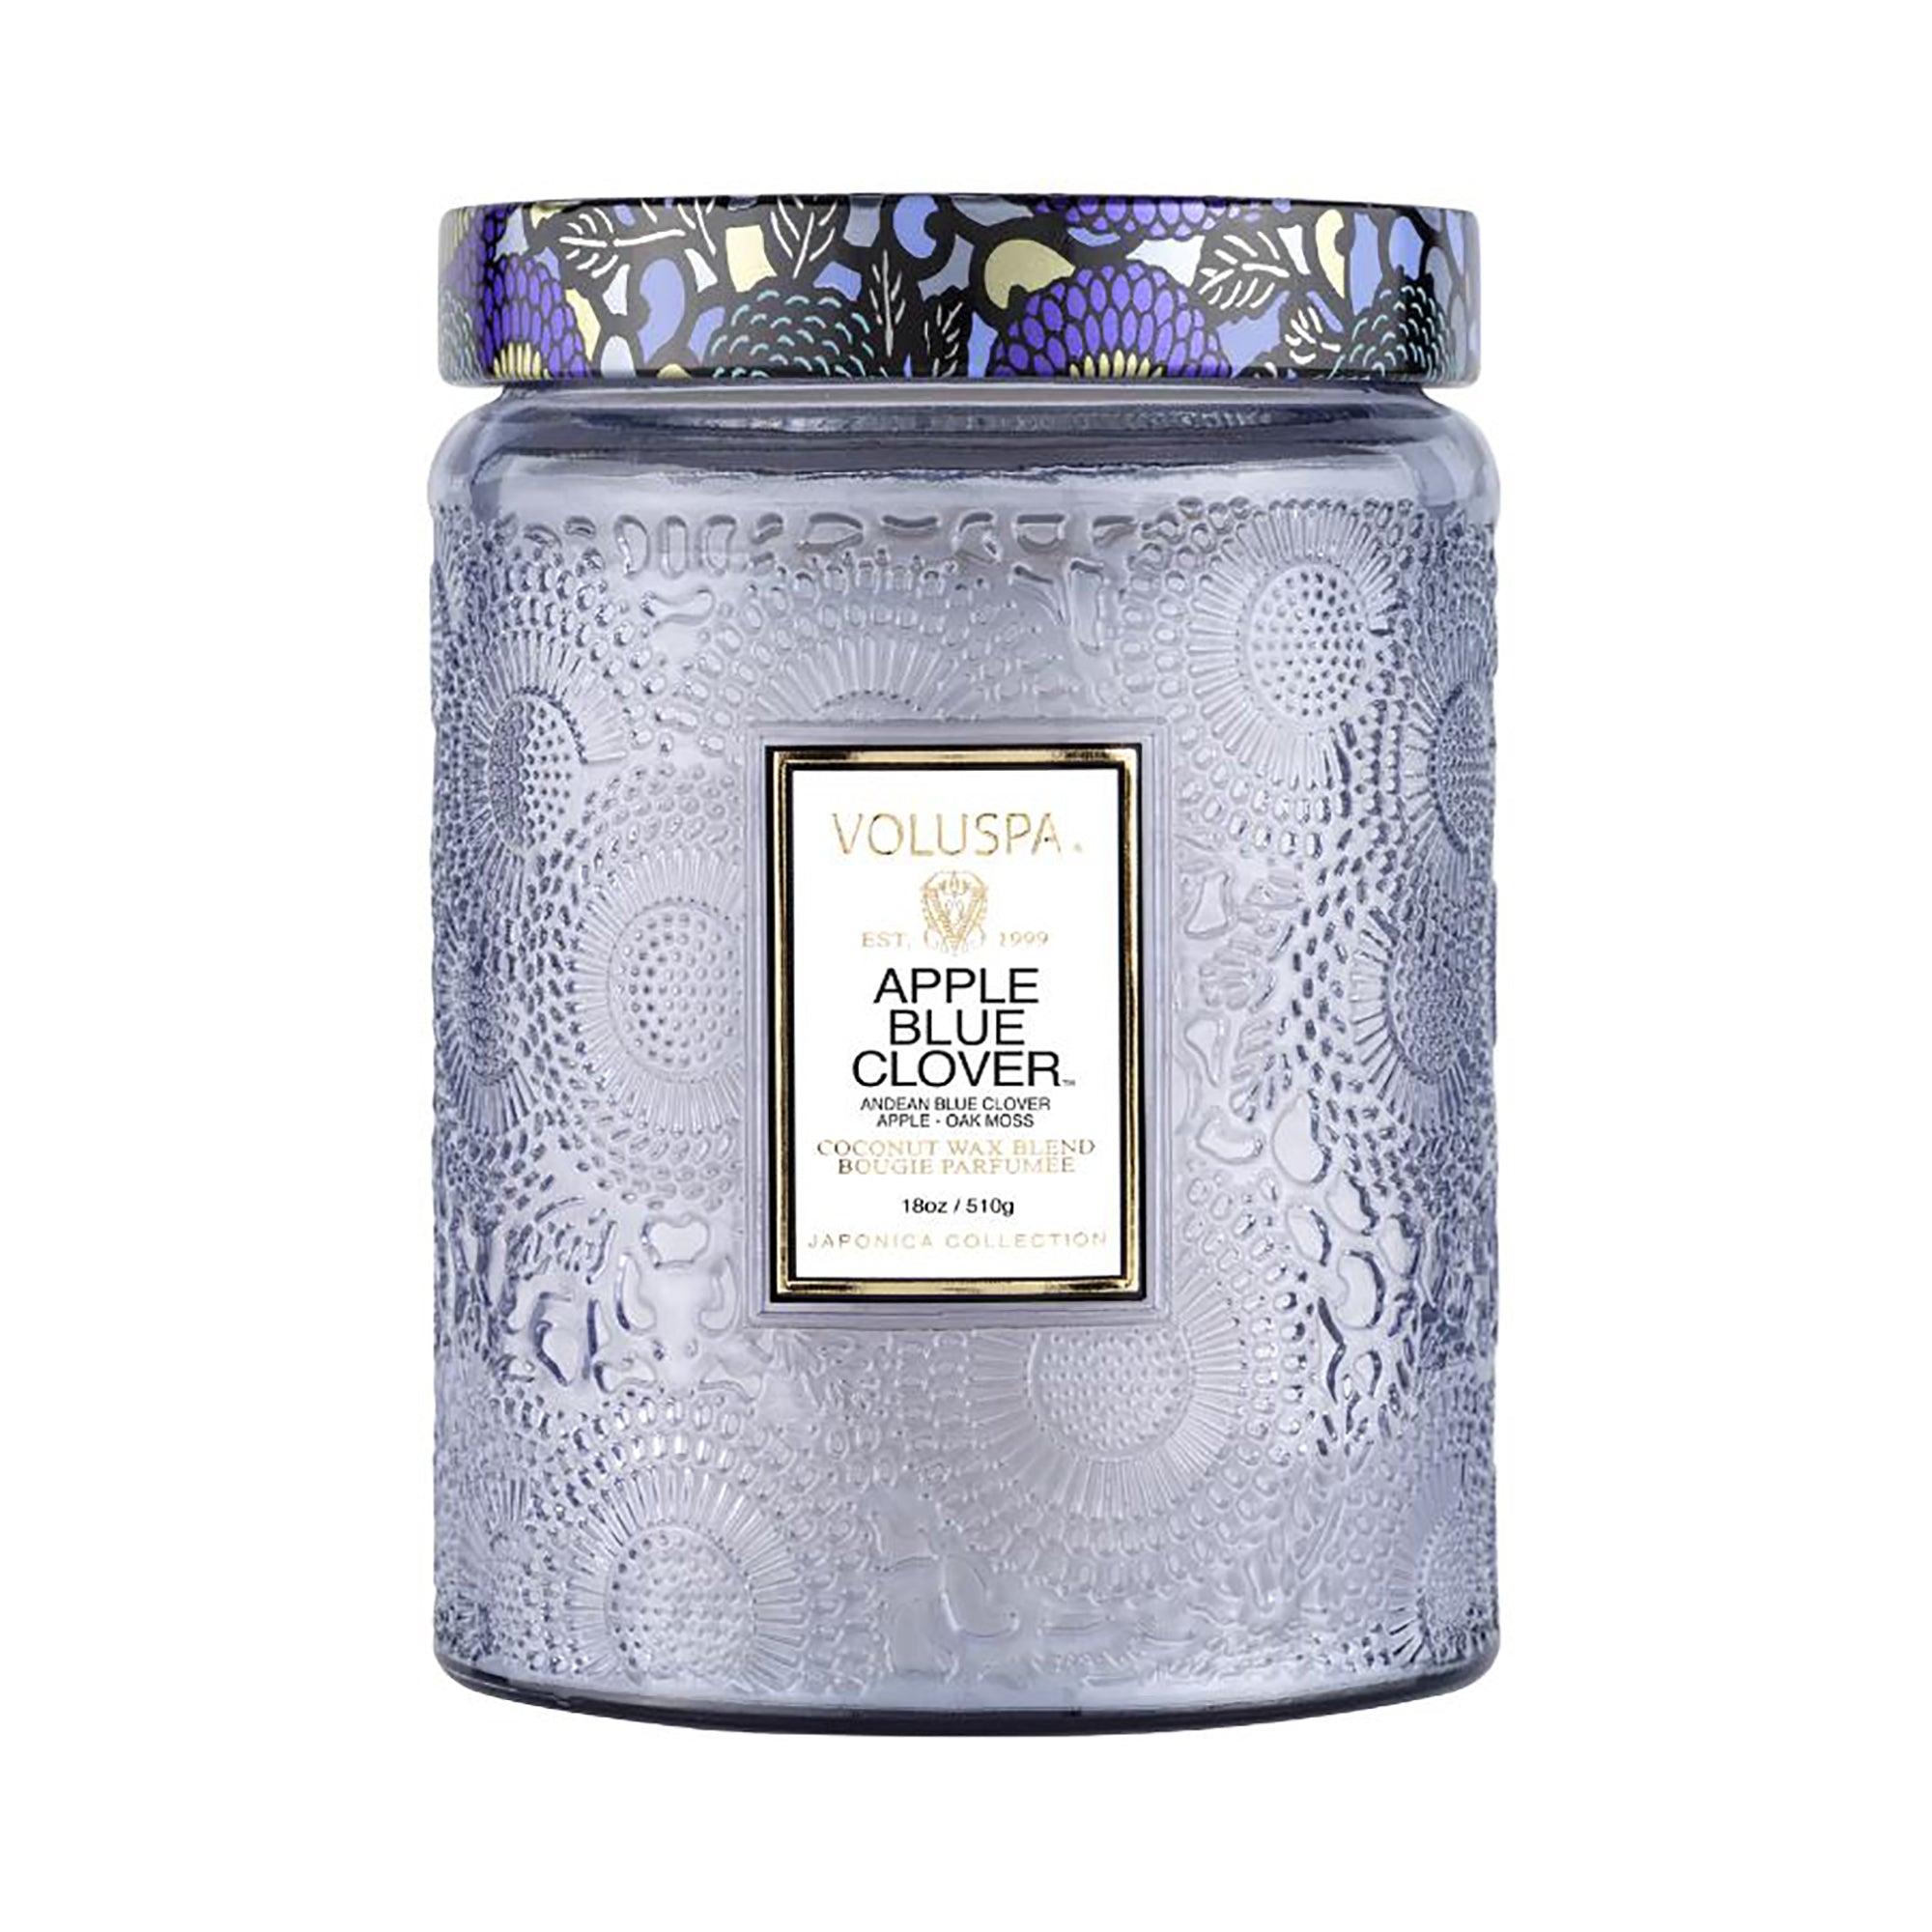 Voluspa Japonica Large Jar Candle 18oz / Apple Blue Clover